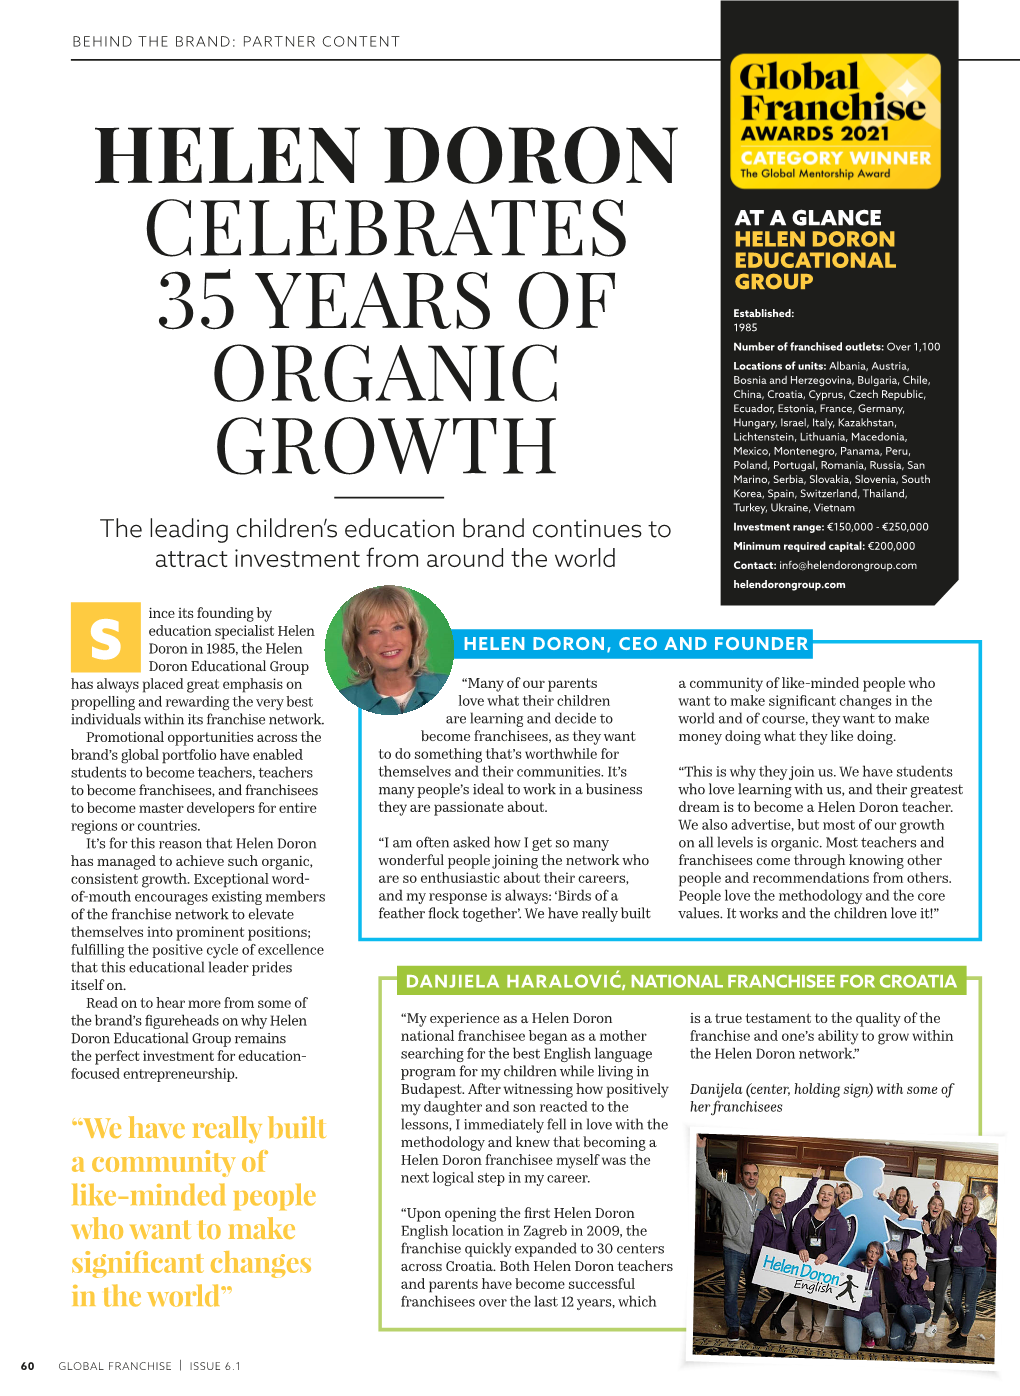 Helen Doron Celebrates 35 Years of Organic Growth